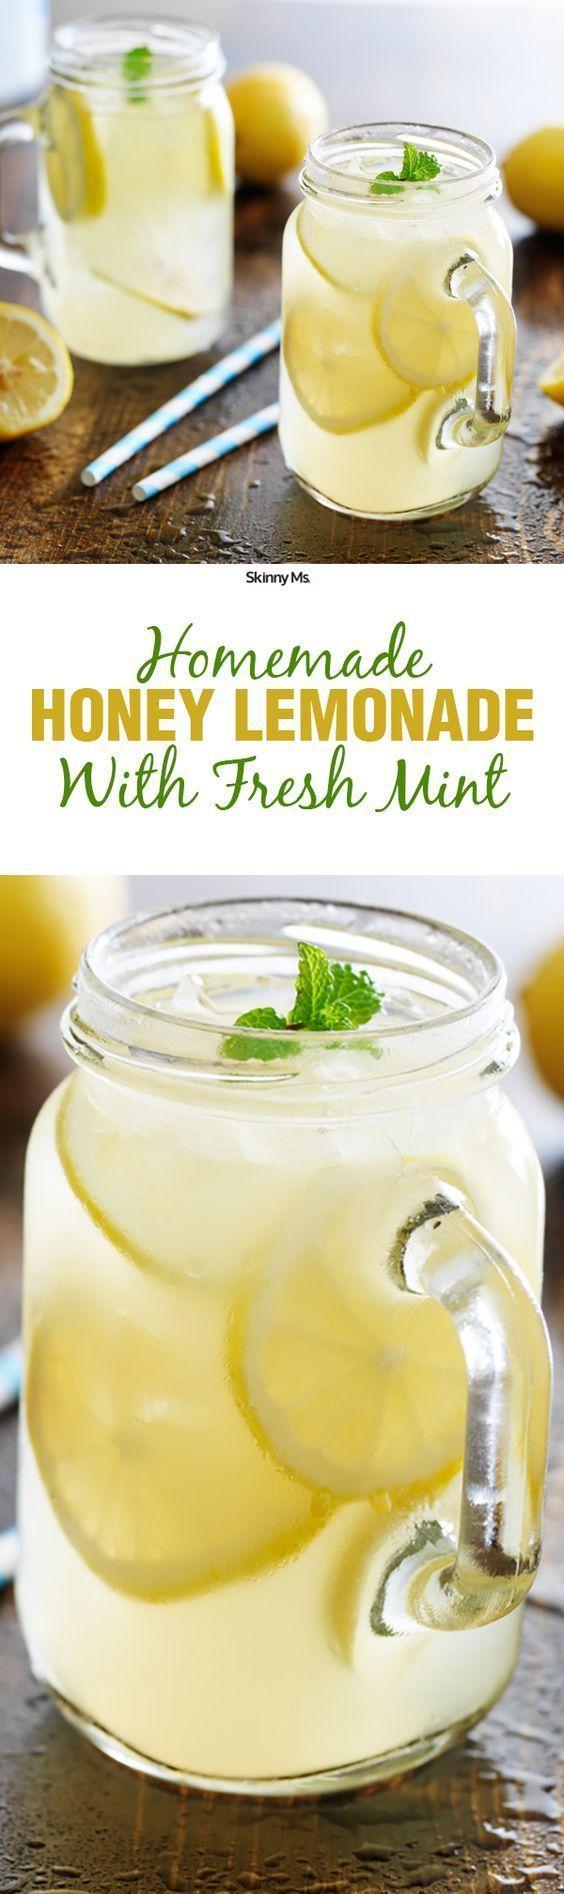 Wedding - Homemade Honey Lemonade With Fresh Mint